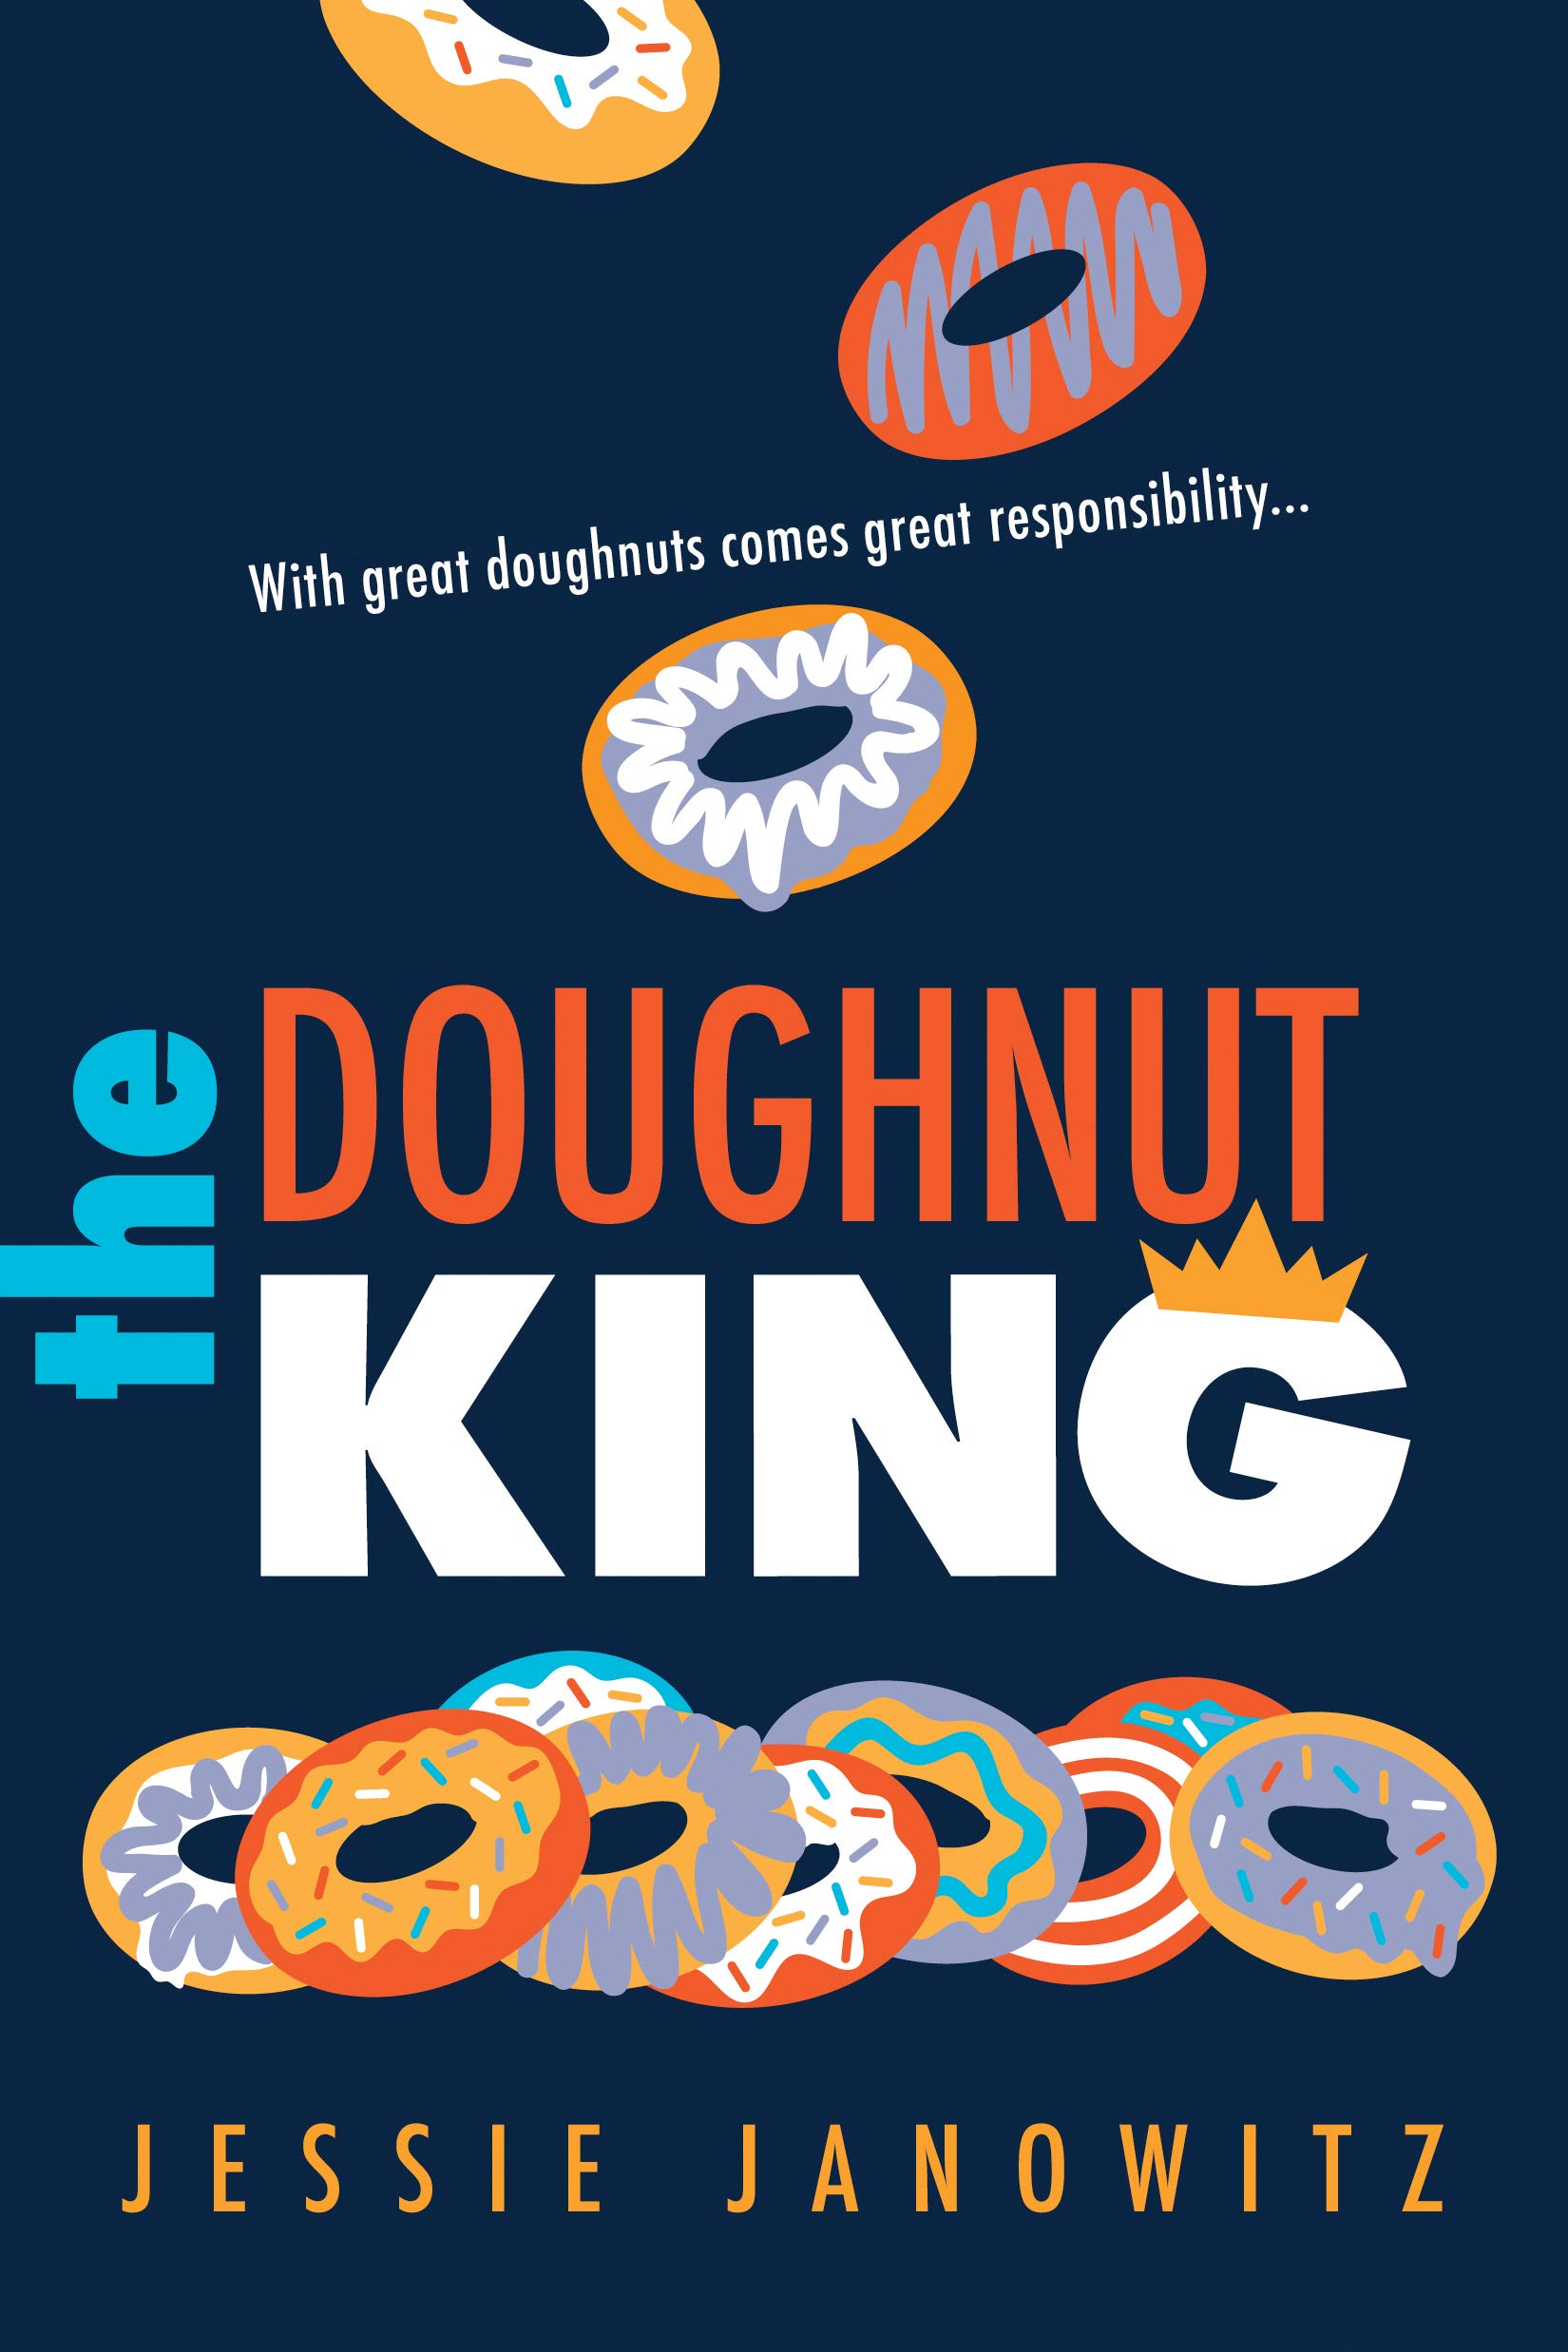 The doughnut king